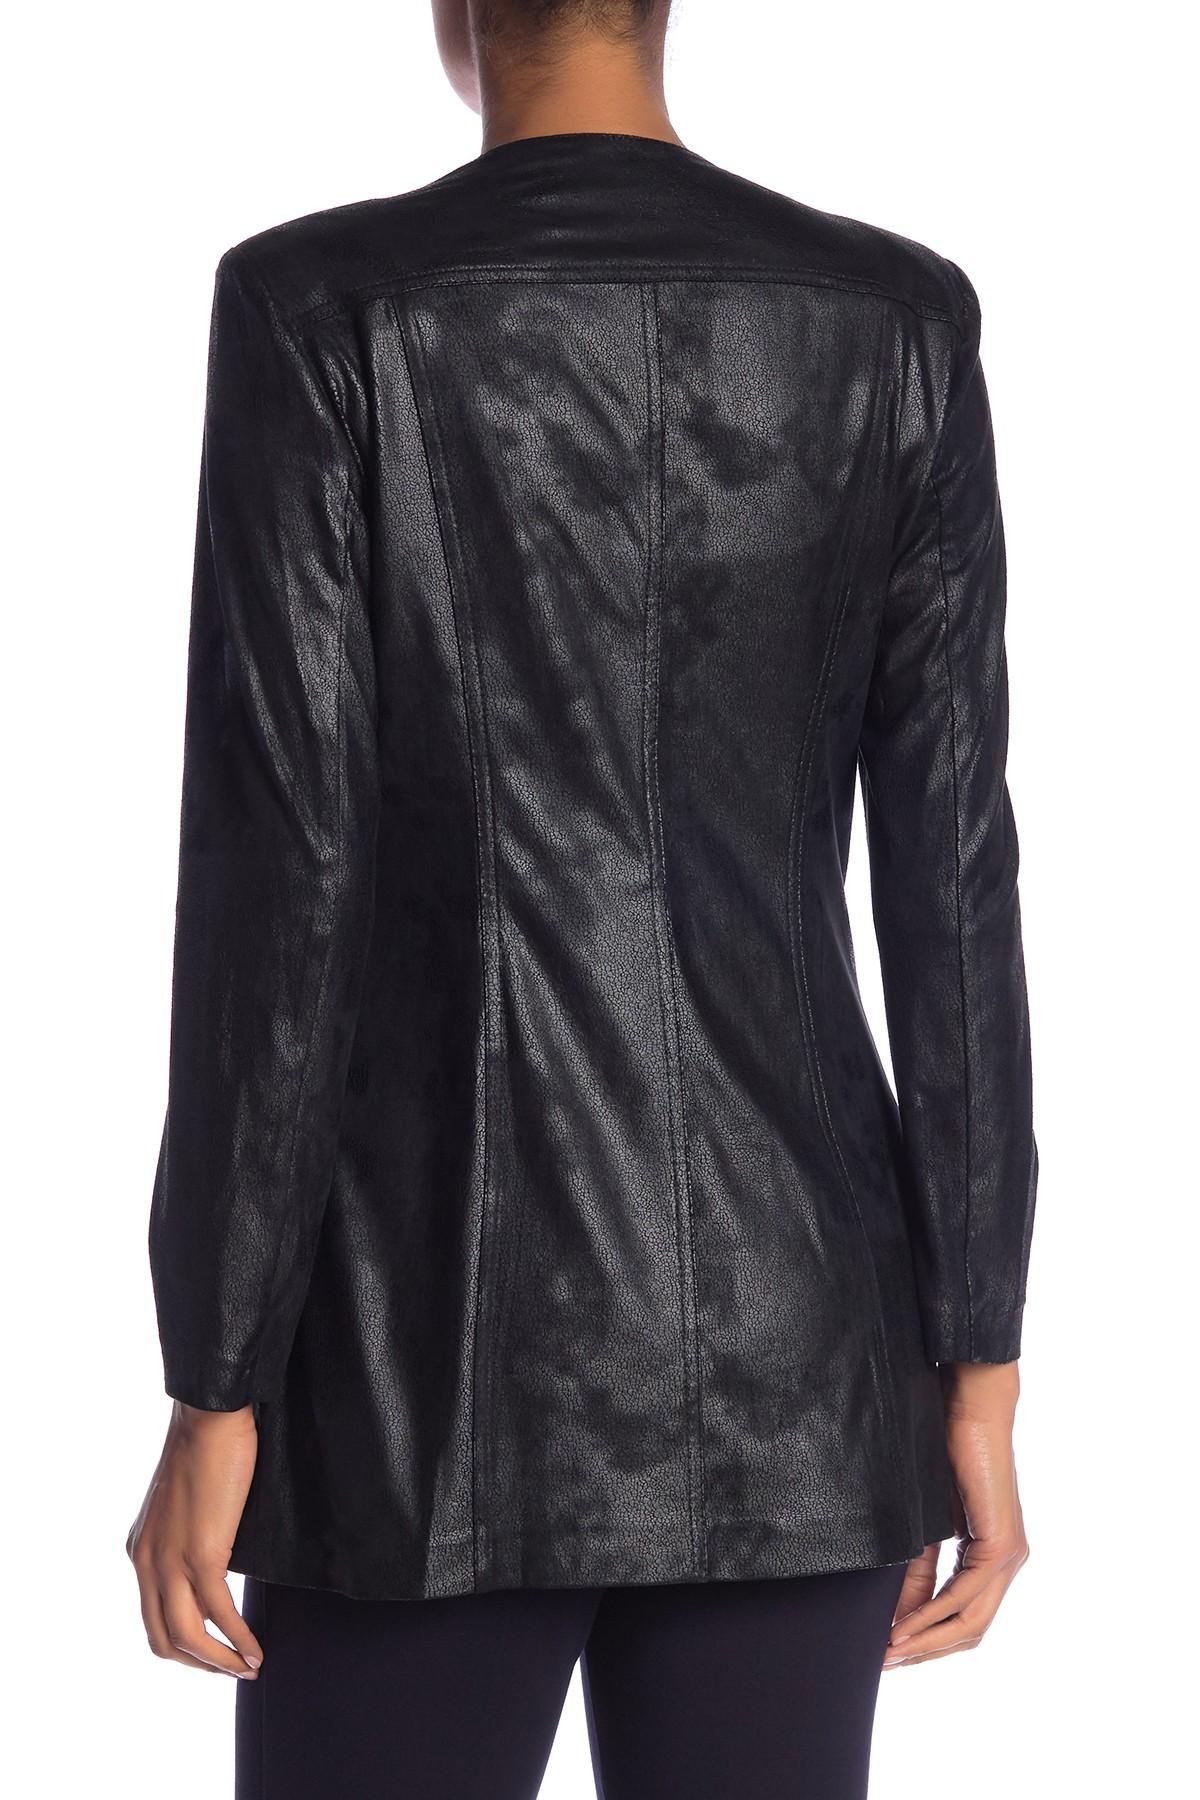 Insight Faux Leather Embellished Rhinestone Jacket in Black - Lyst